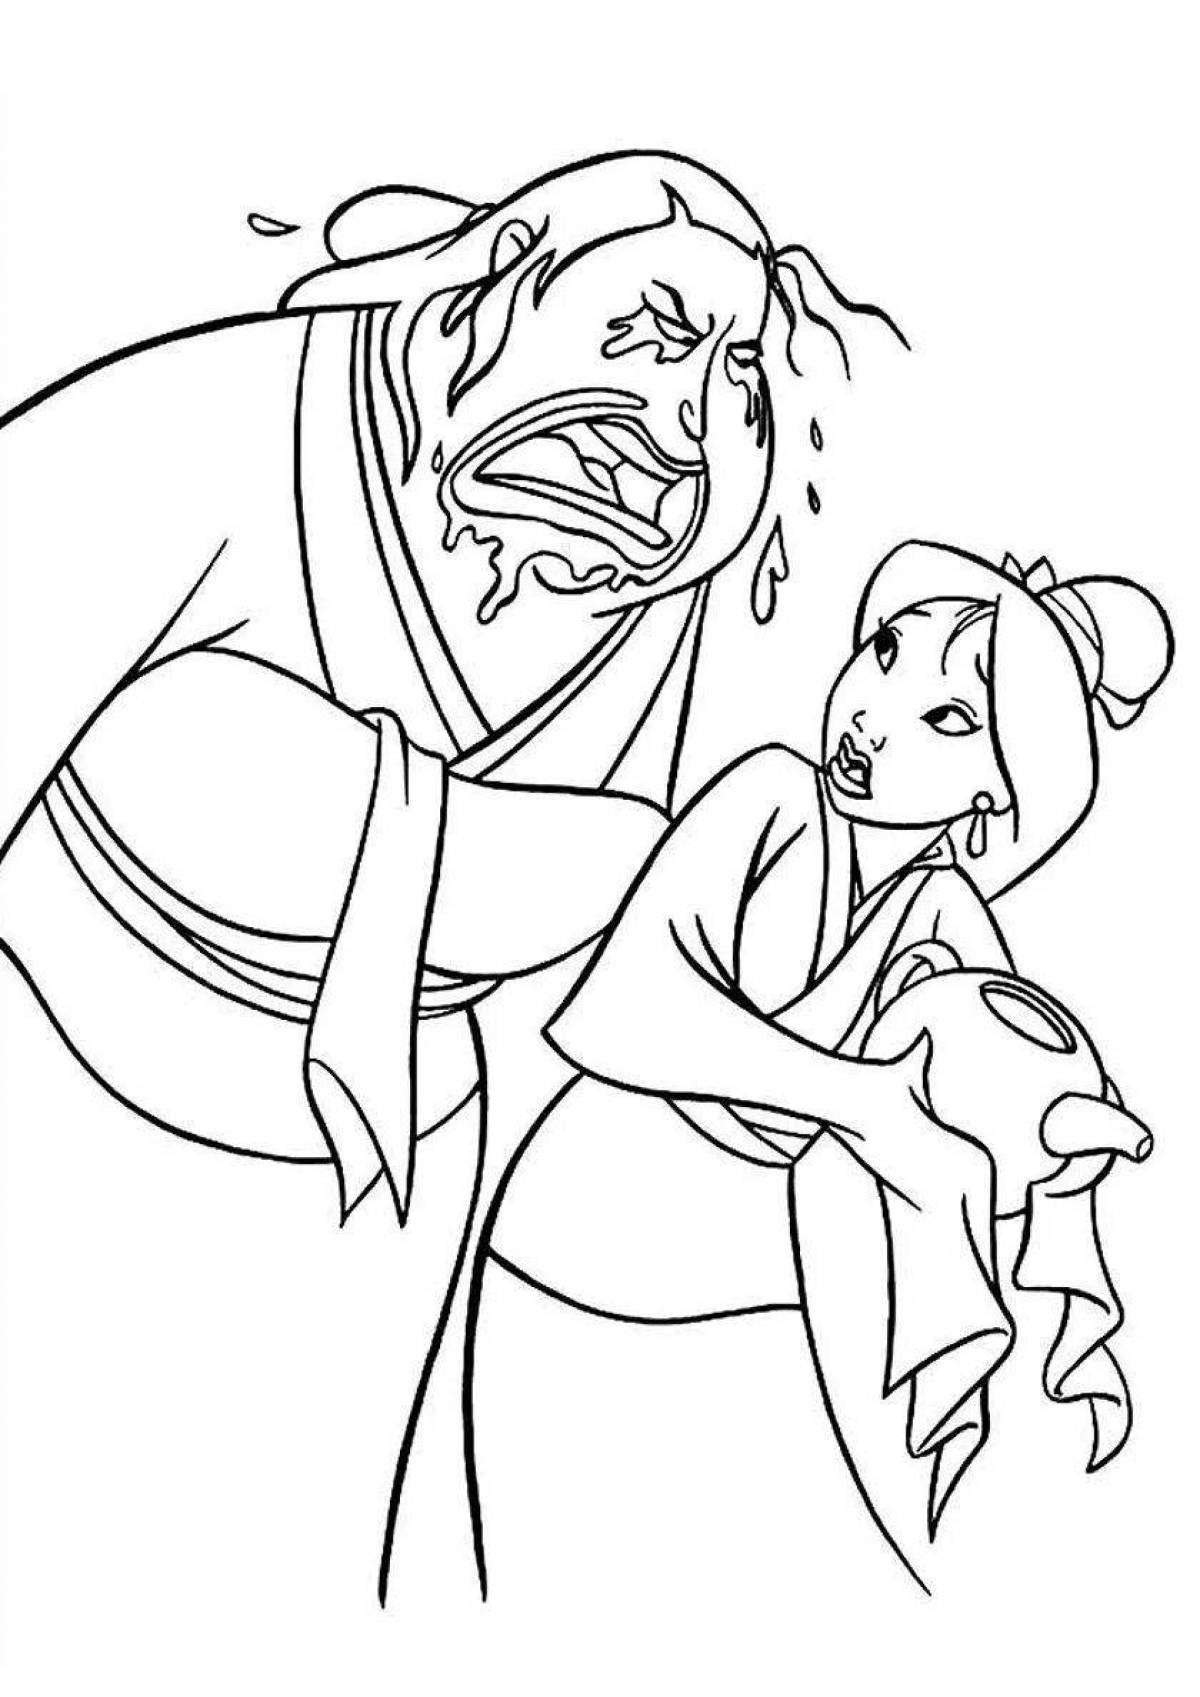 Great coloring of Princess Mulan